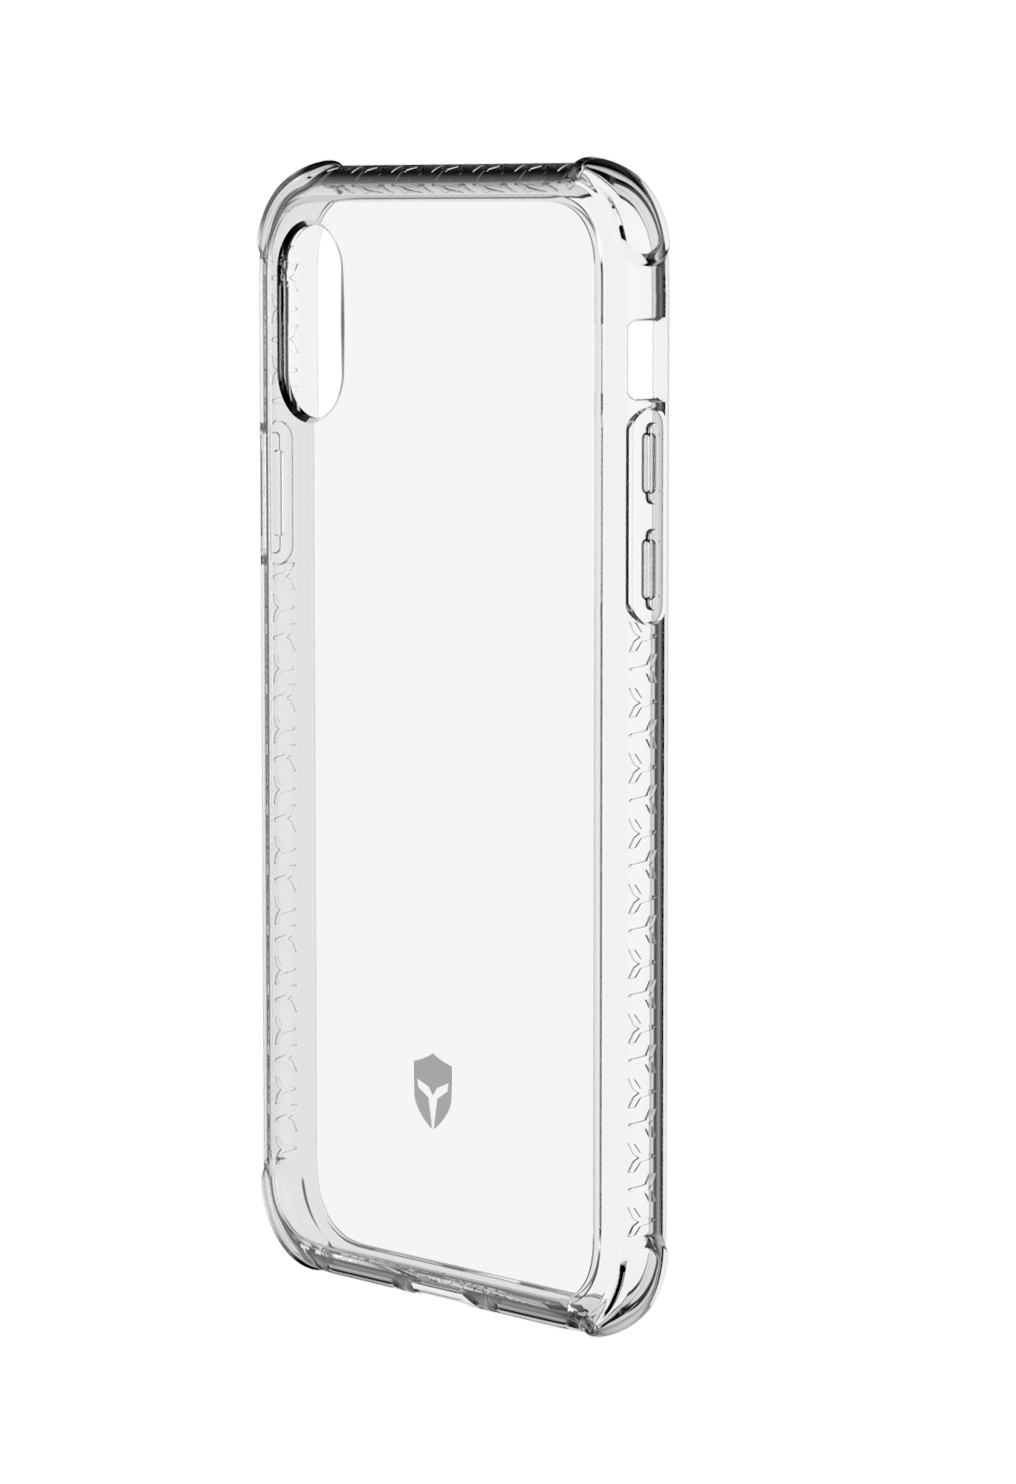 Coque Force Case Air iPhone XR transparente